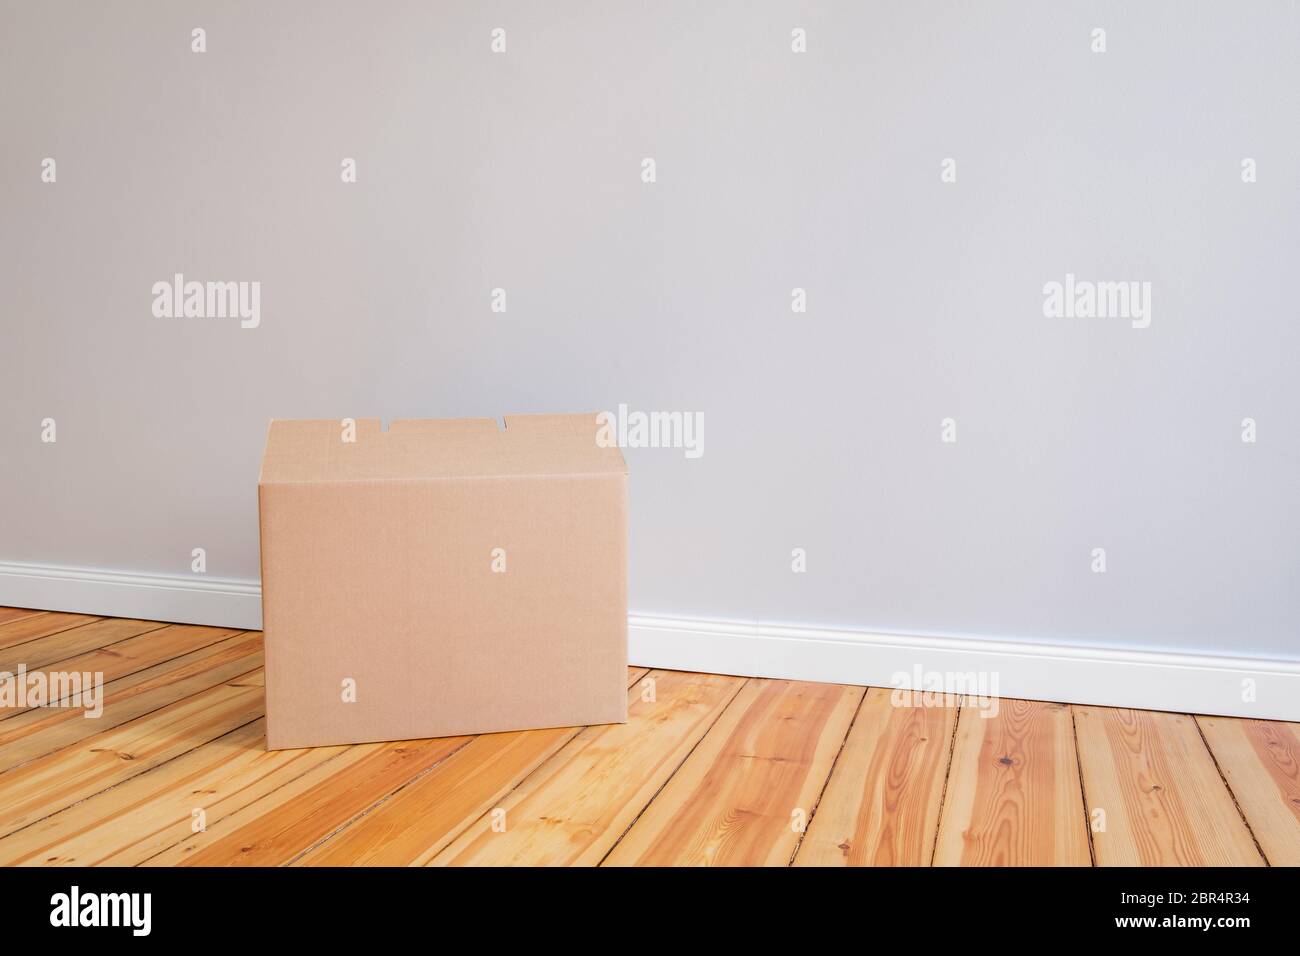 cardboard box on wooden floor in empty room,relocation concept Stock Photo